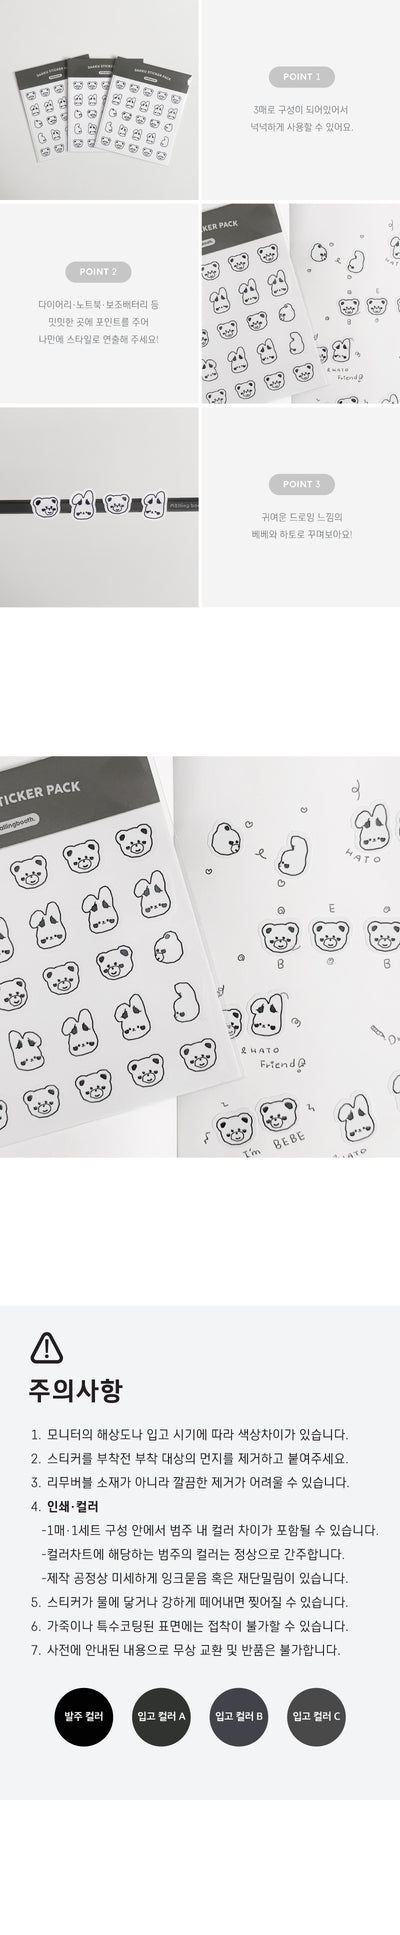 DAKKU Sticker Pack drawing friends